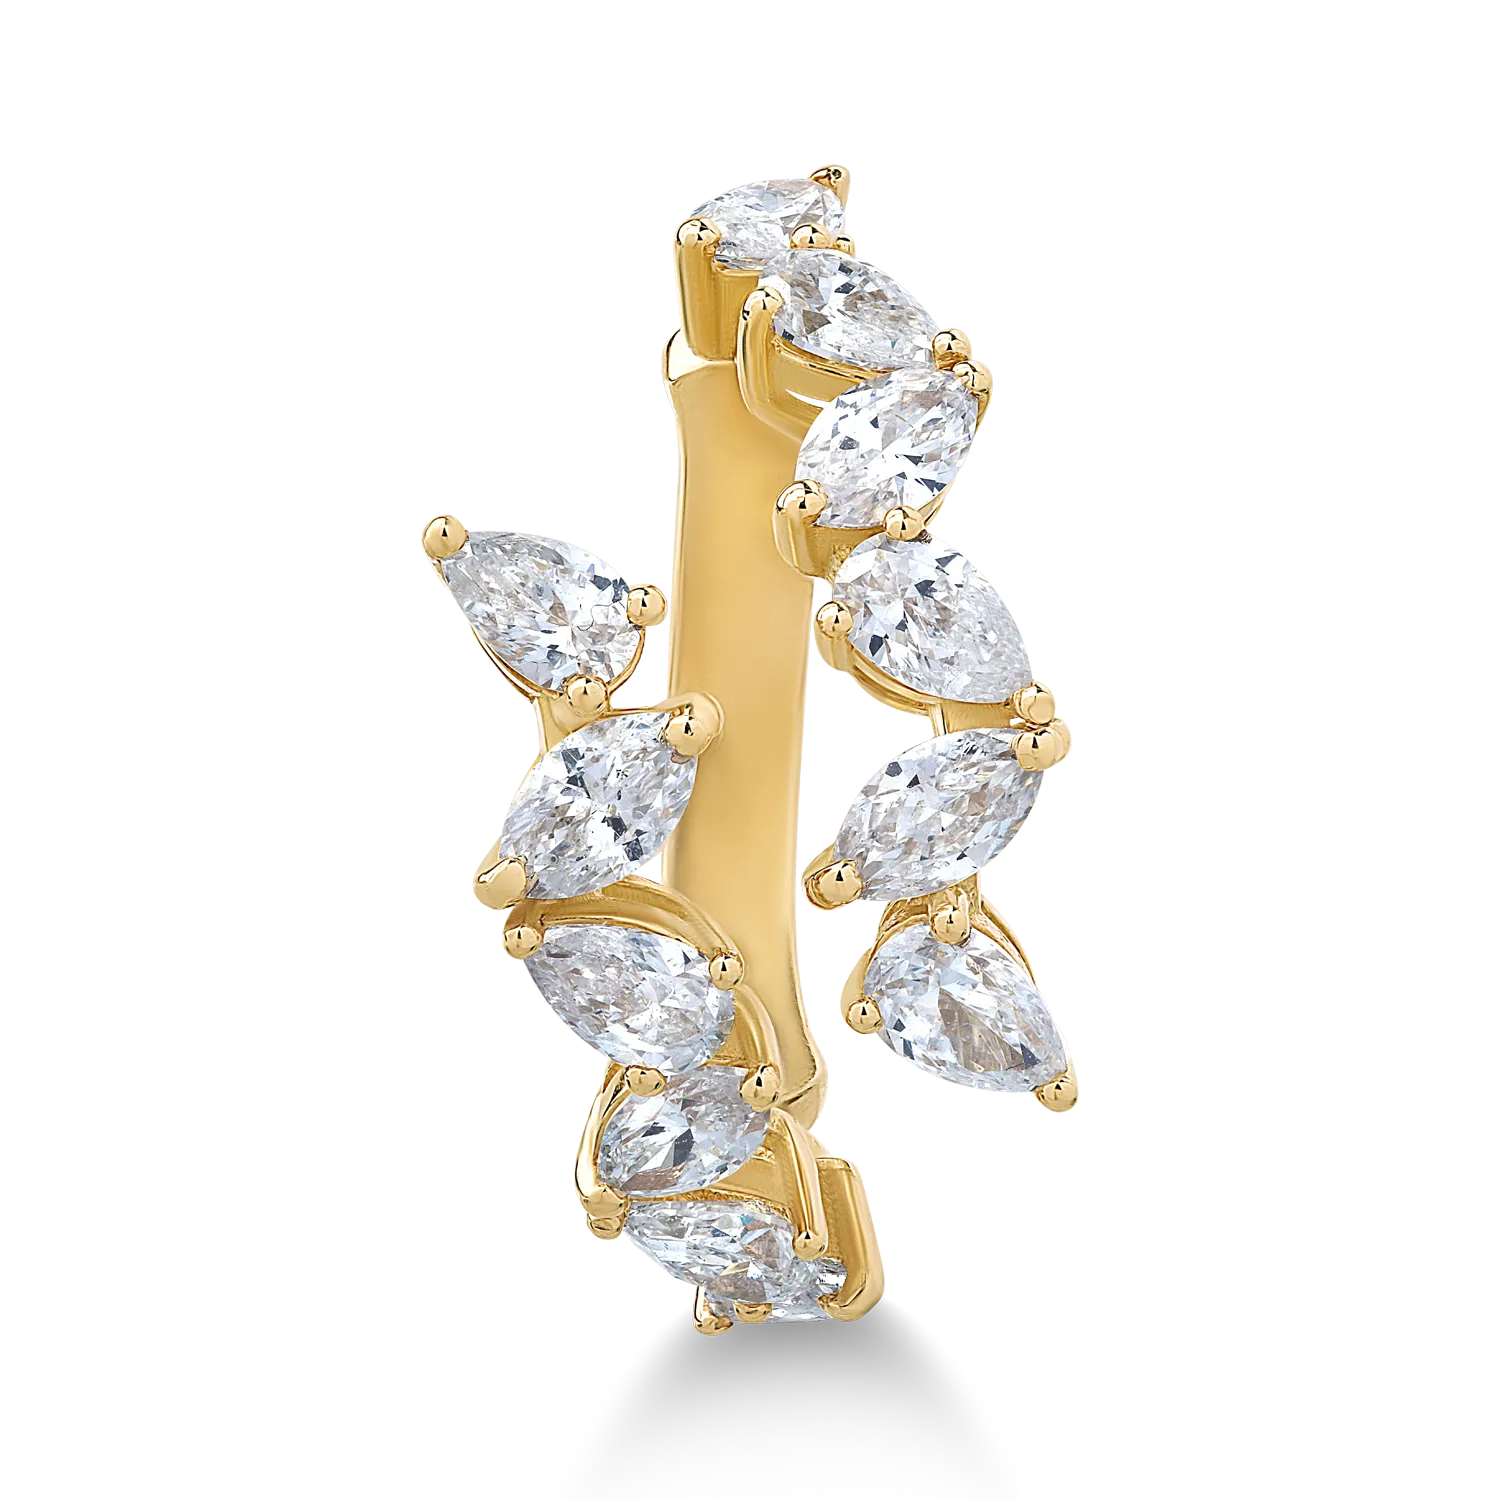 Inel din aur galben de 18K cu diamante de 1.68ct